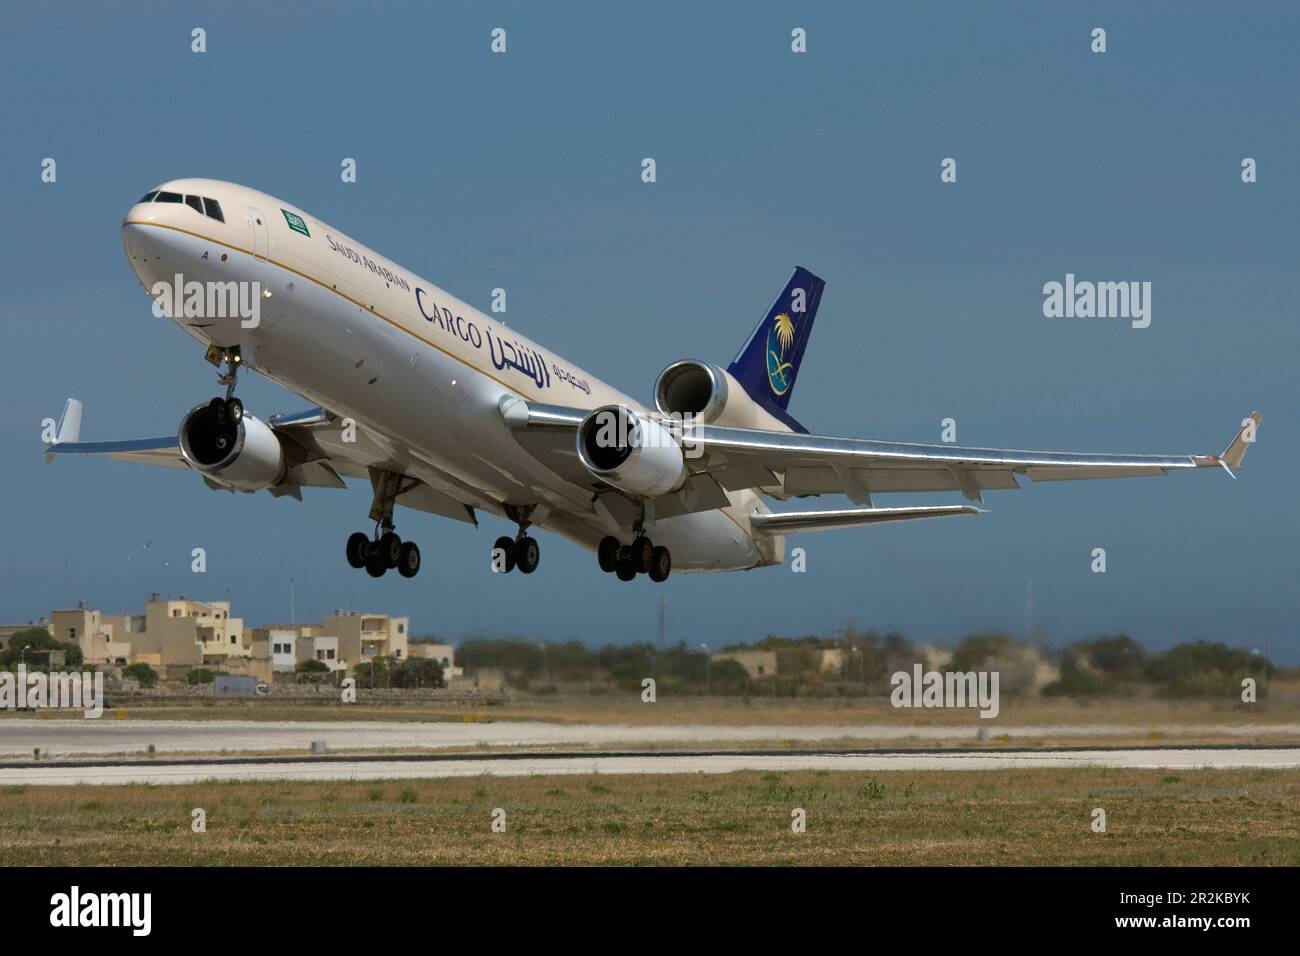 Saudi Arabian Airlines Cargo McDonnell Douglas MD-11F (REG: HZ-ANA) taking off from runway 31. Stock Photo